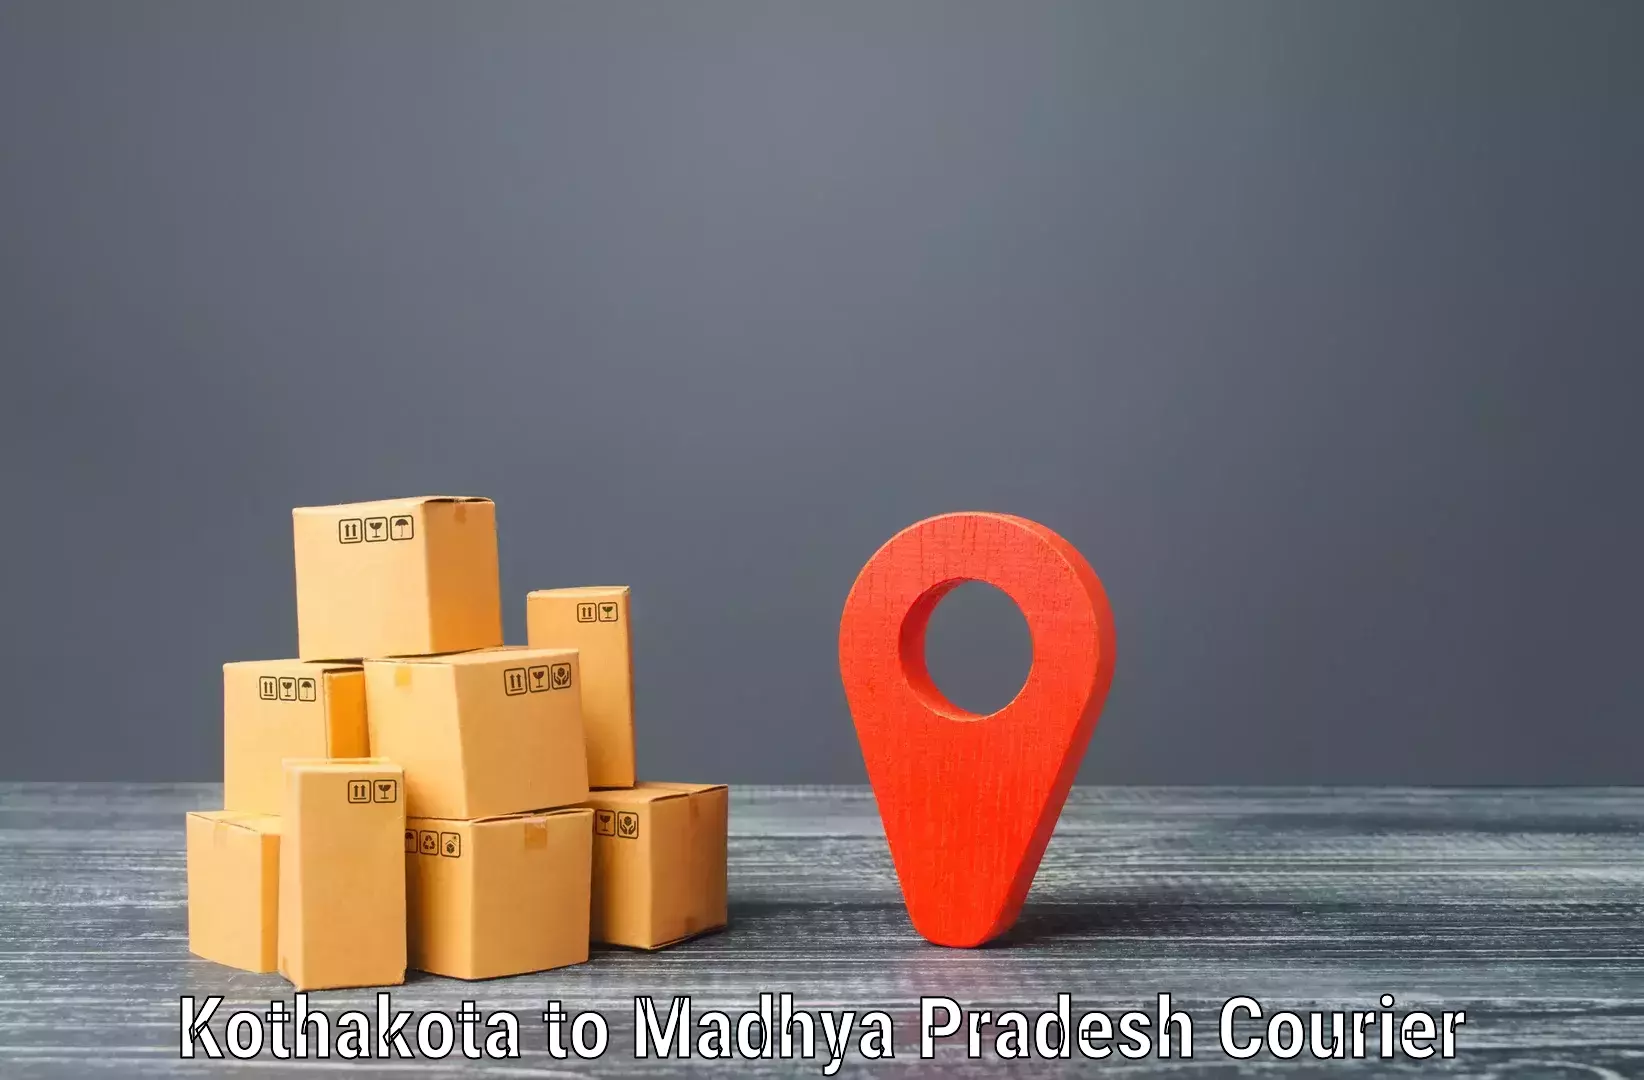 Express delivery capabilities Kothakota to Madhya Pradesh